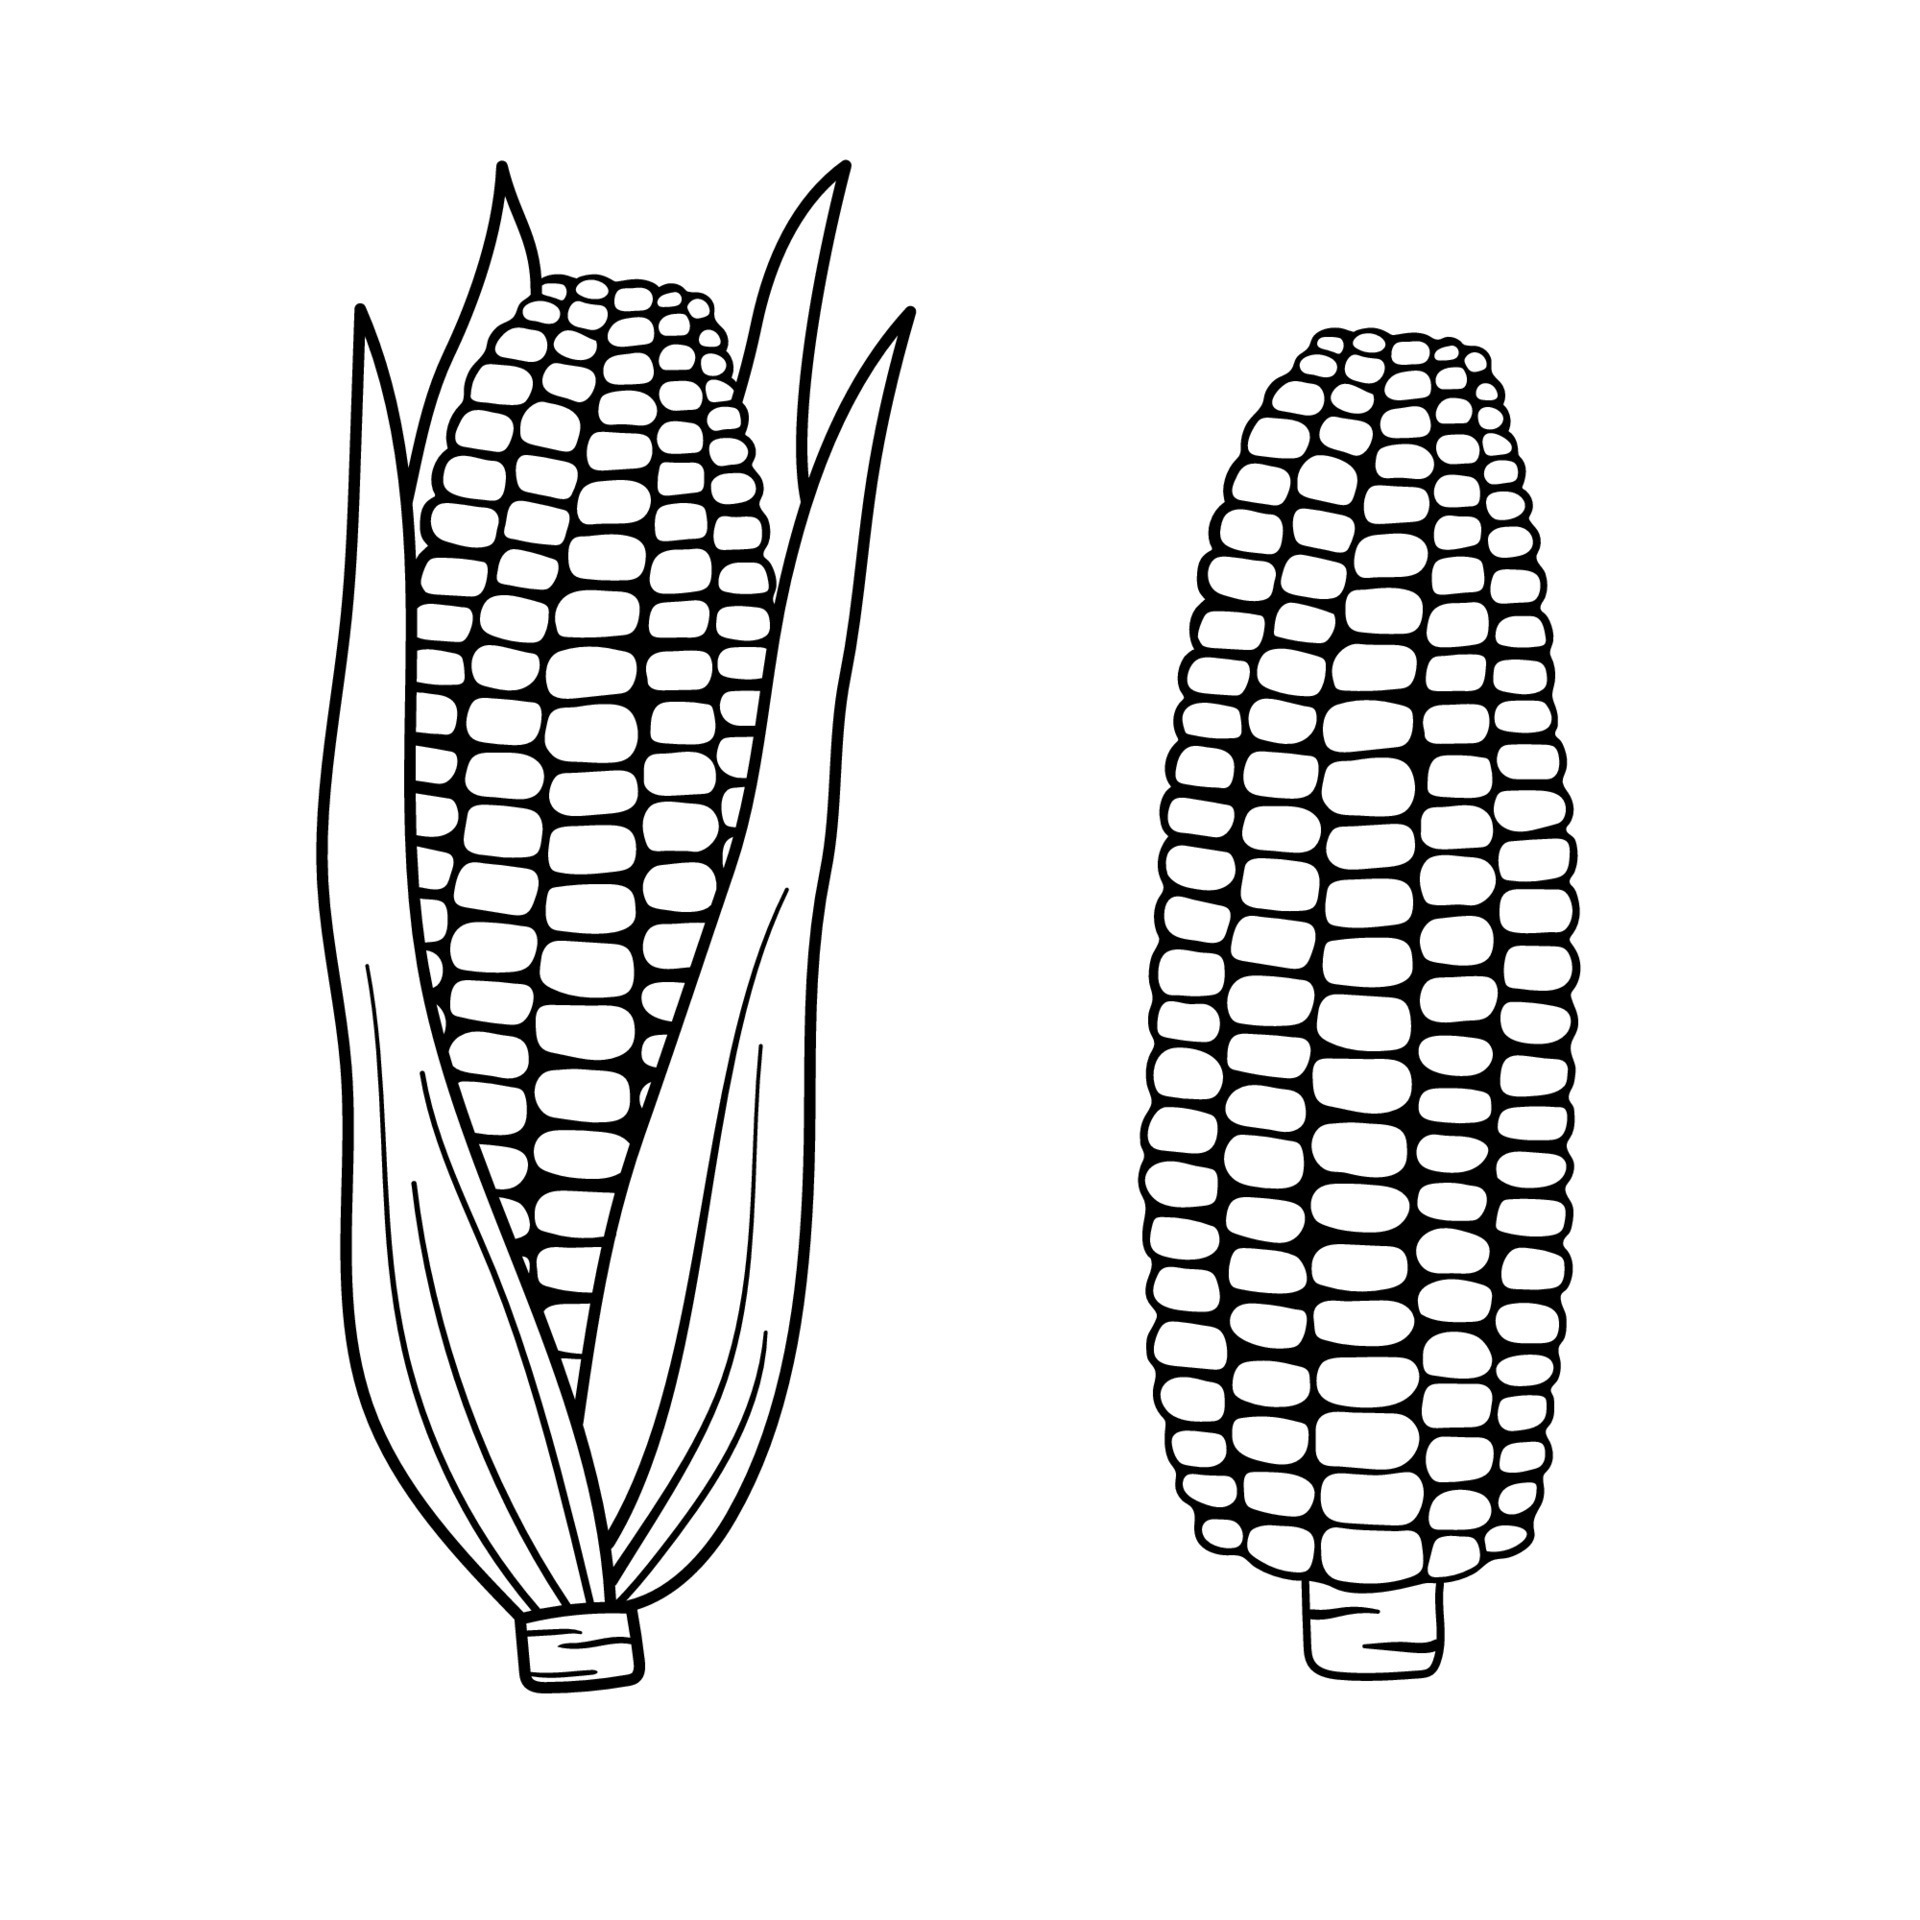 corn-outline-simple-illustration-for-menu-hand-drawn-line-sketch-corn